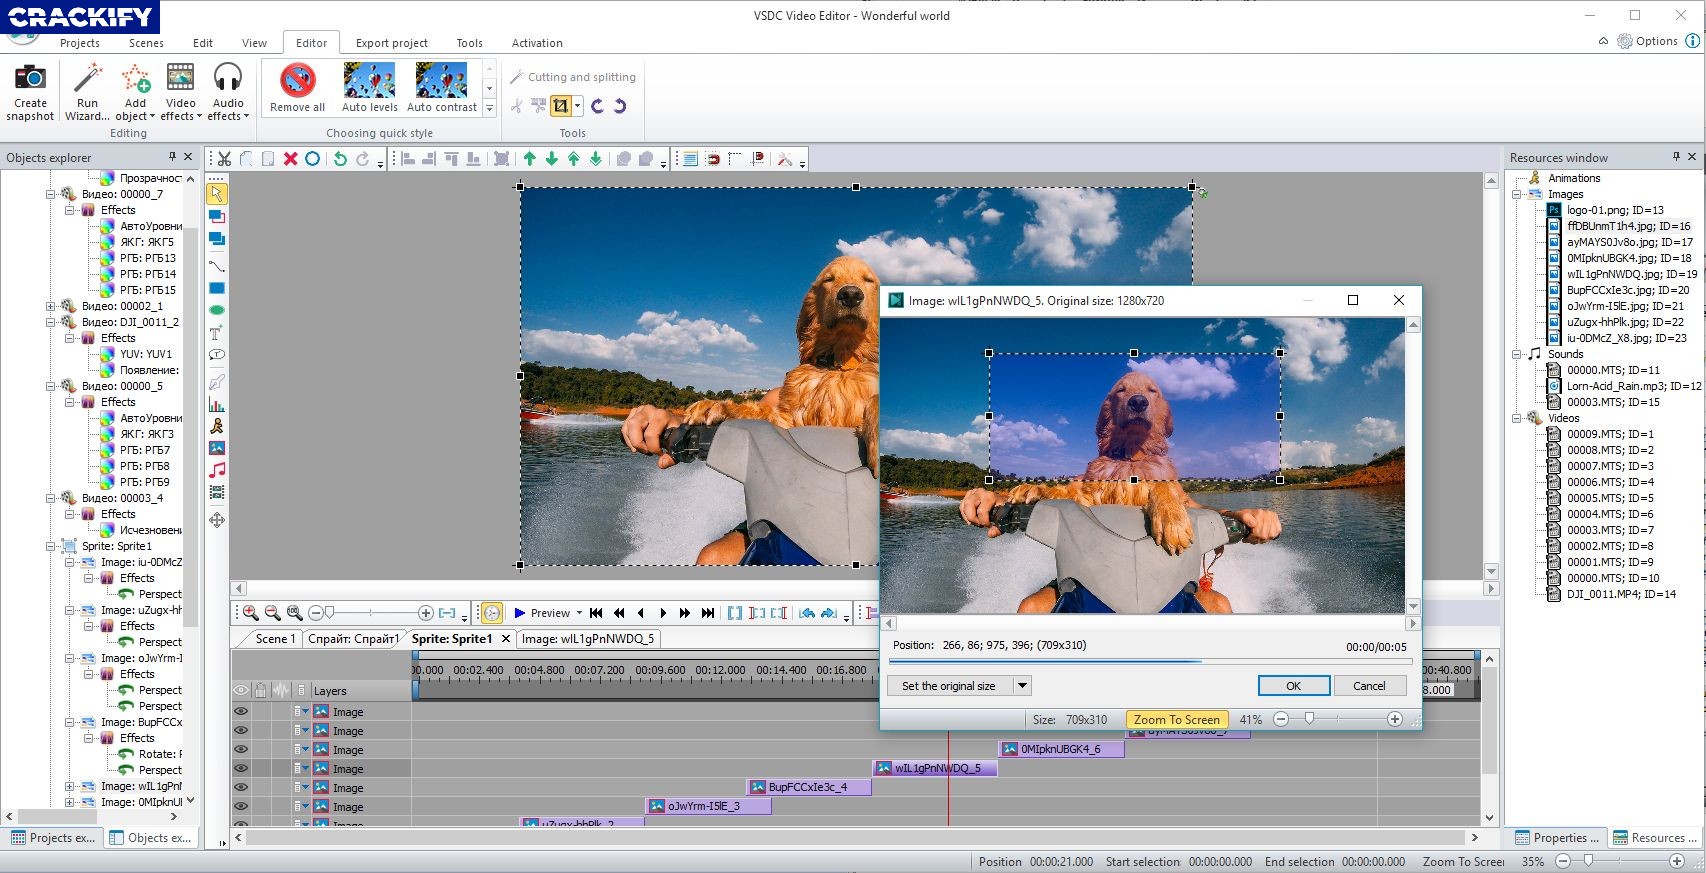 VSDC Video Editor Pro 6.3 Crack Free Download